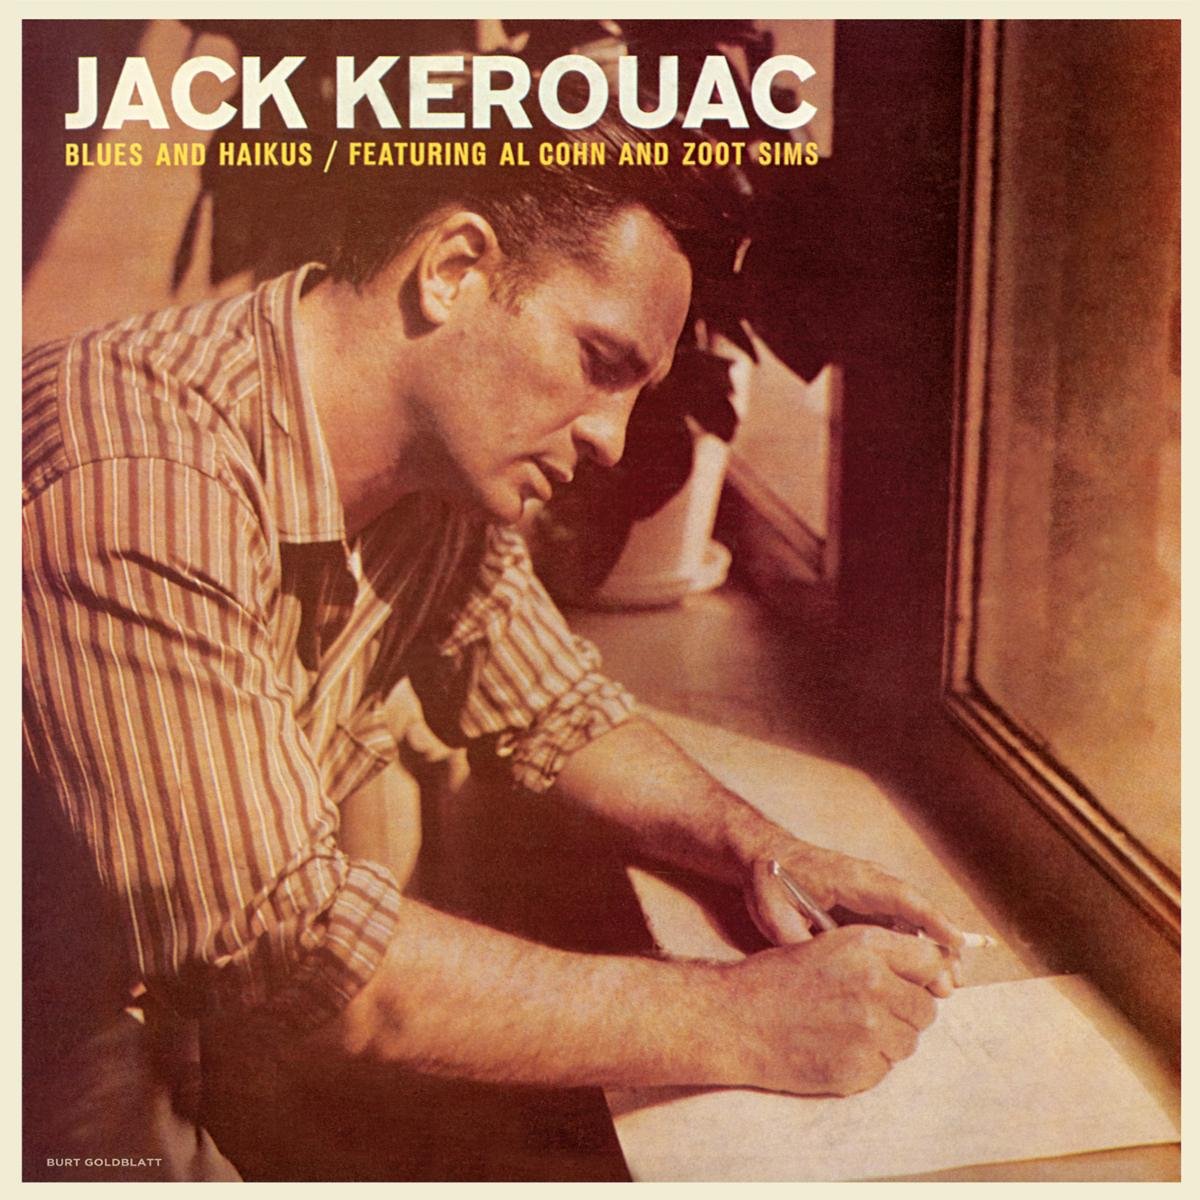 Jack Kerouac (Reissue)